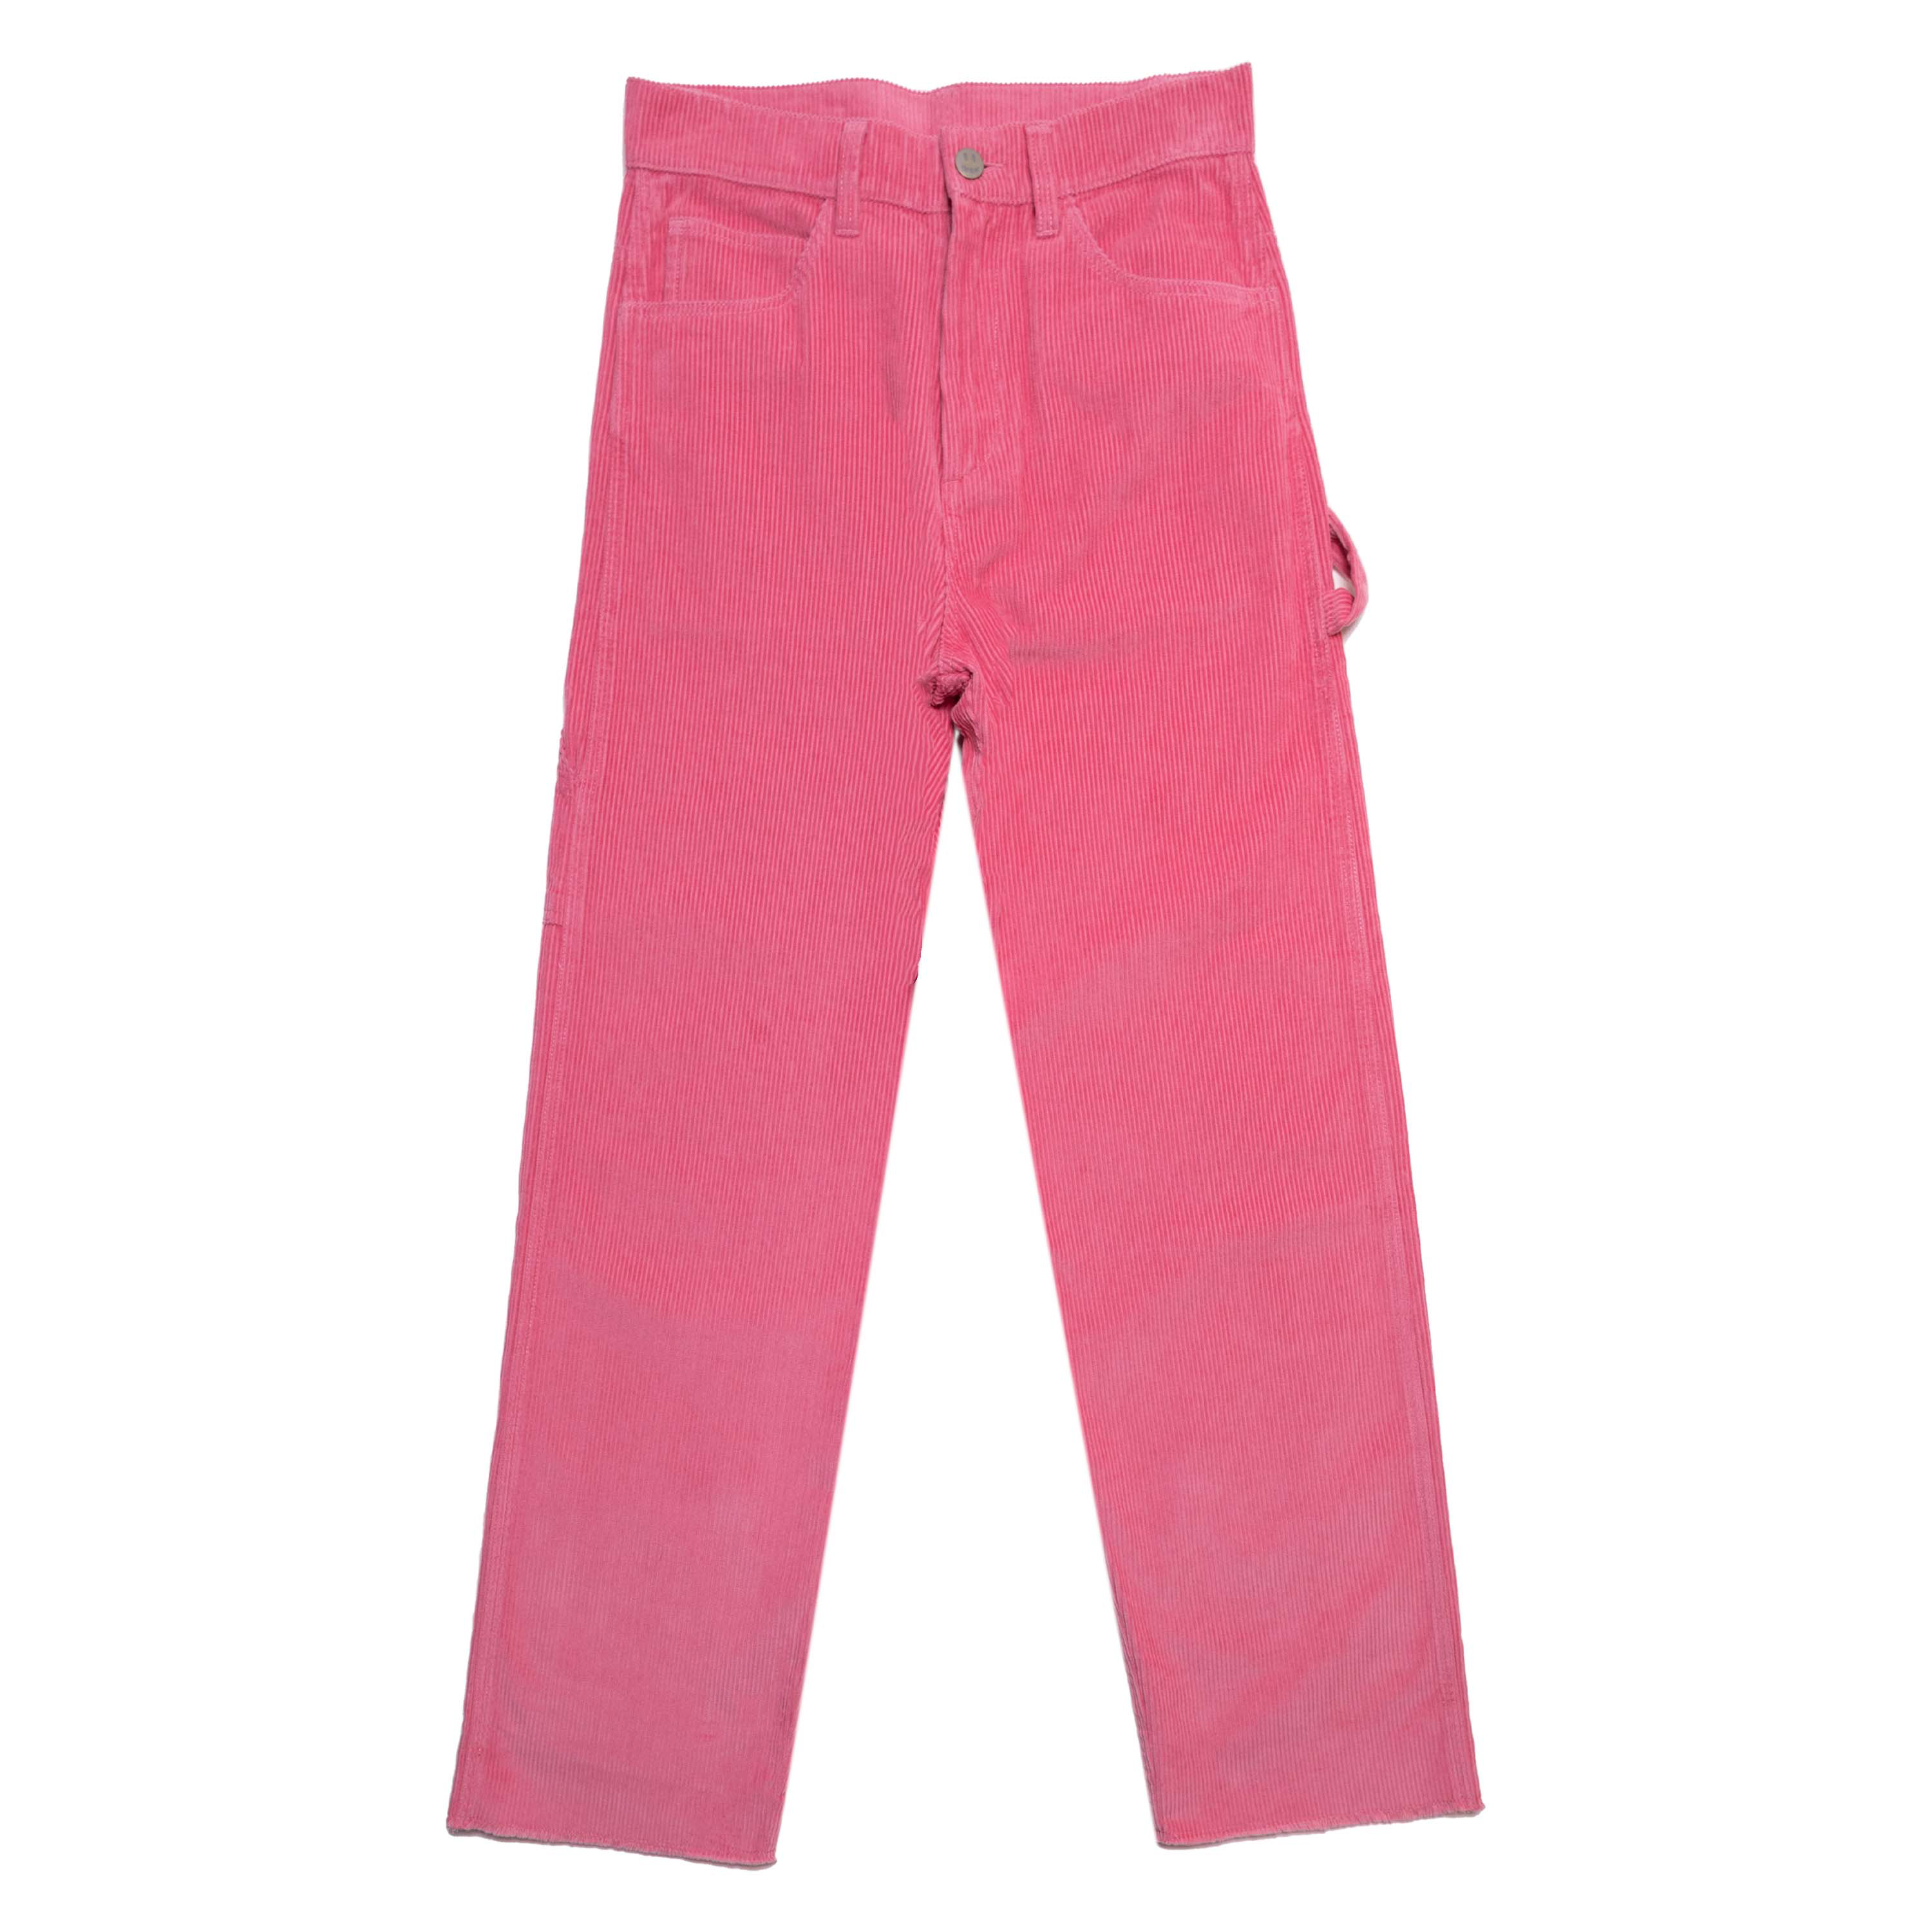 Crewcuts Hot Pink Corduroy Pants